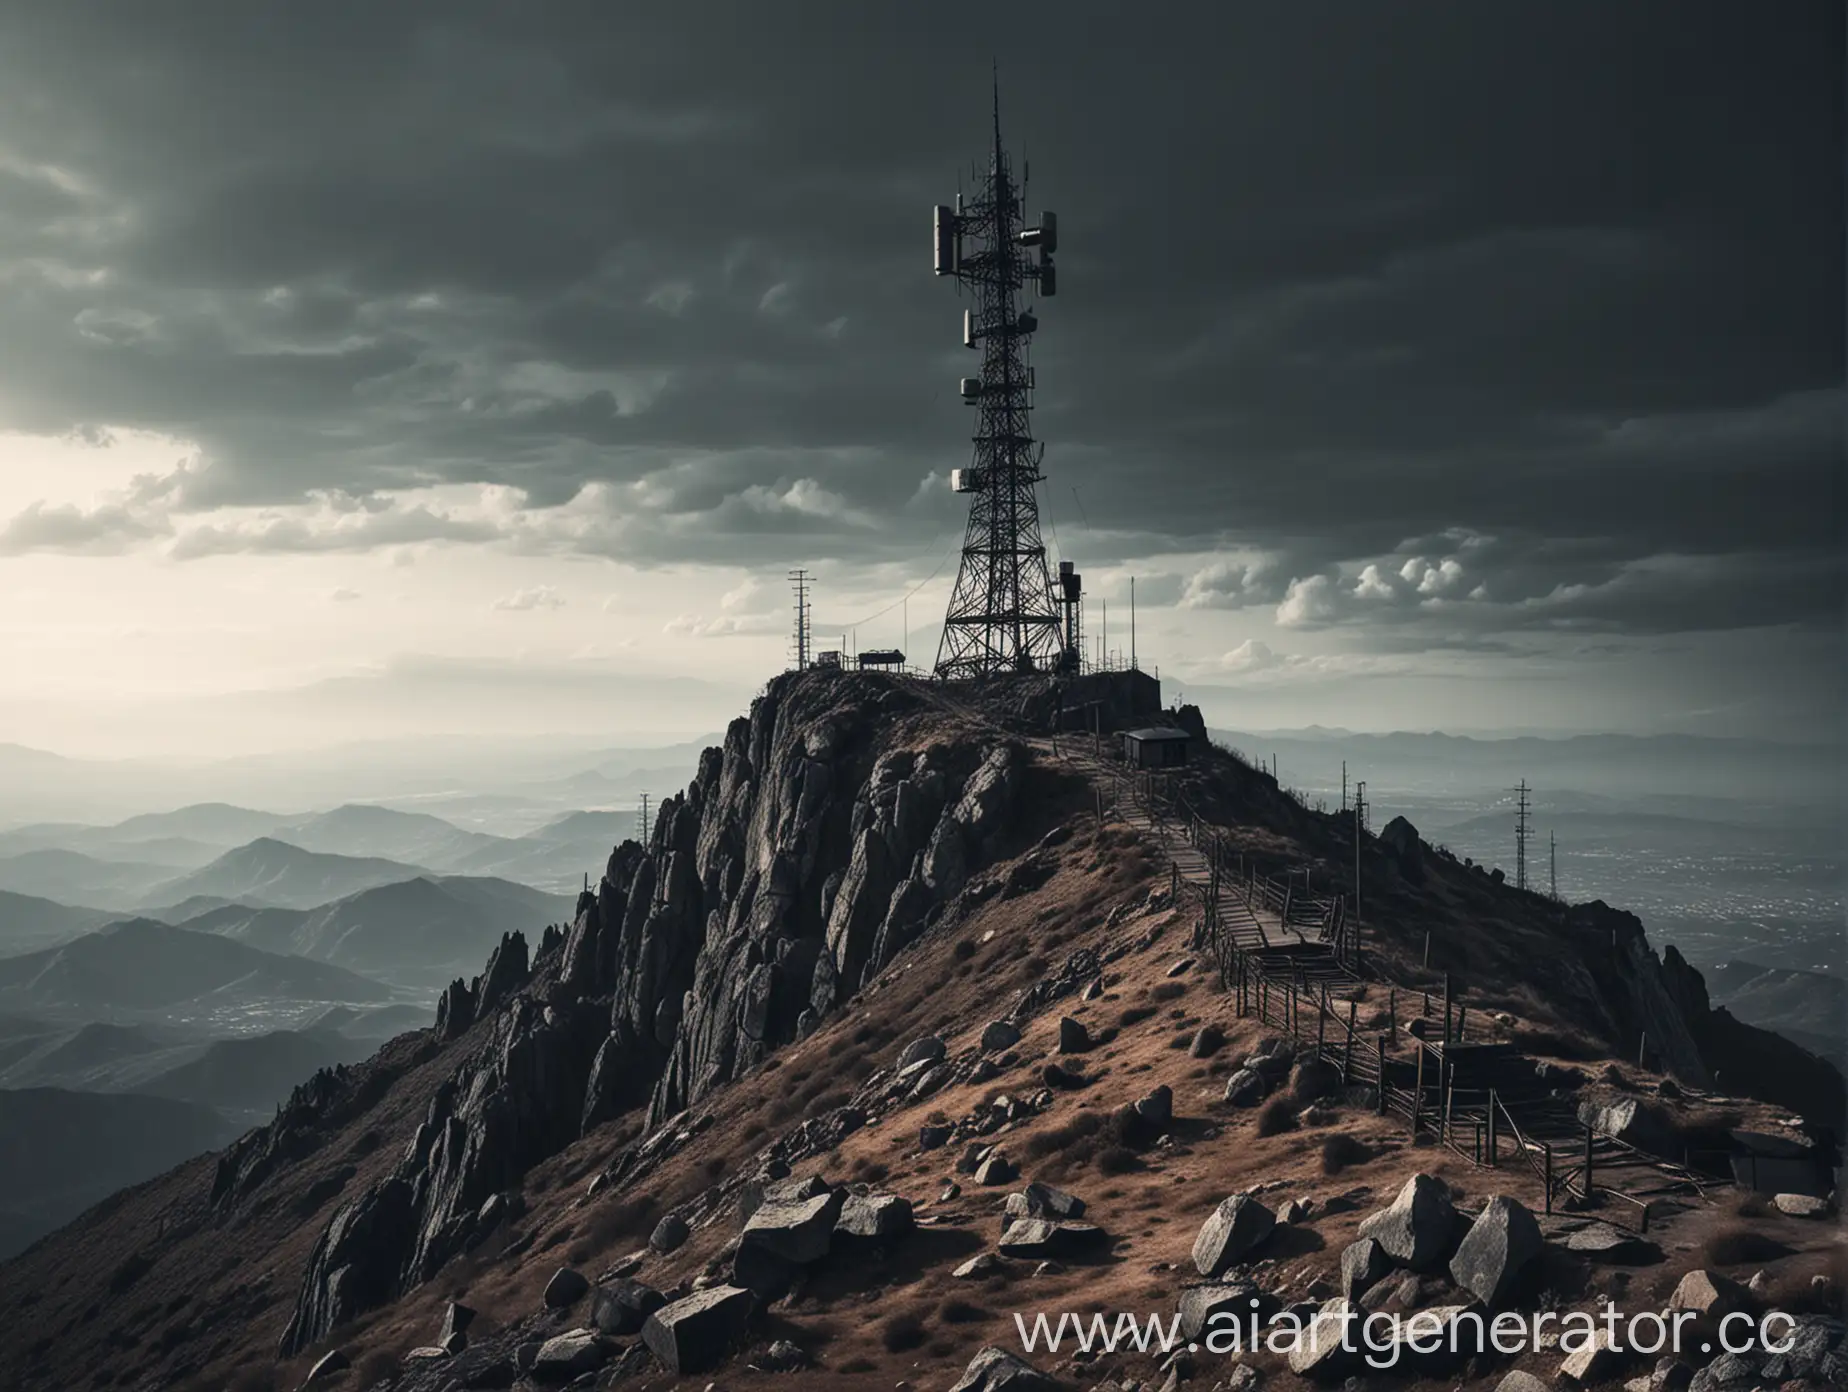 Desolate-Mountain-Peak-with-Radio-Tower-in-Apocalyptic-Scene